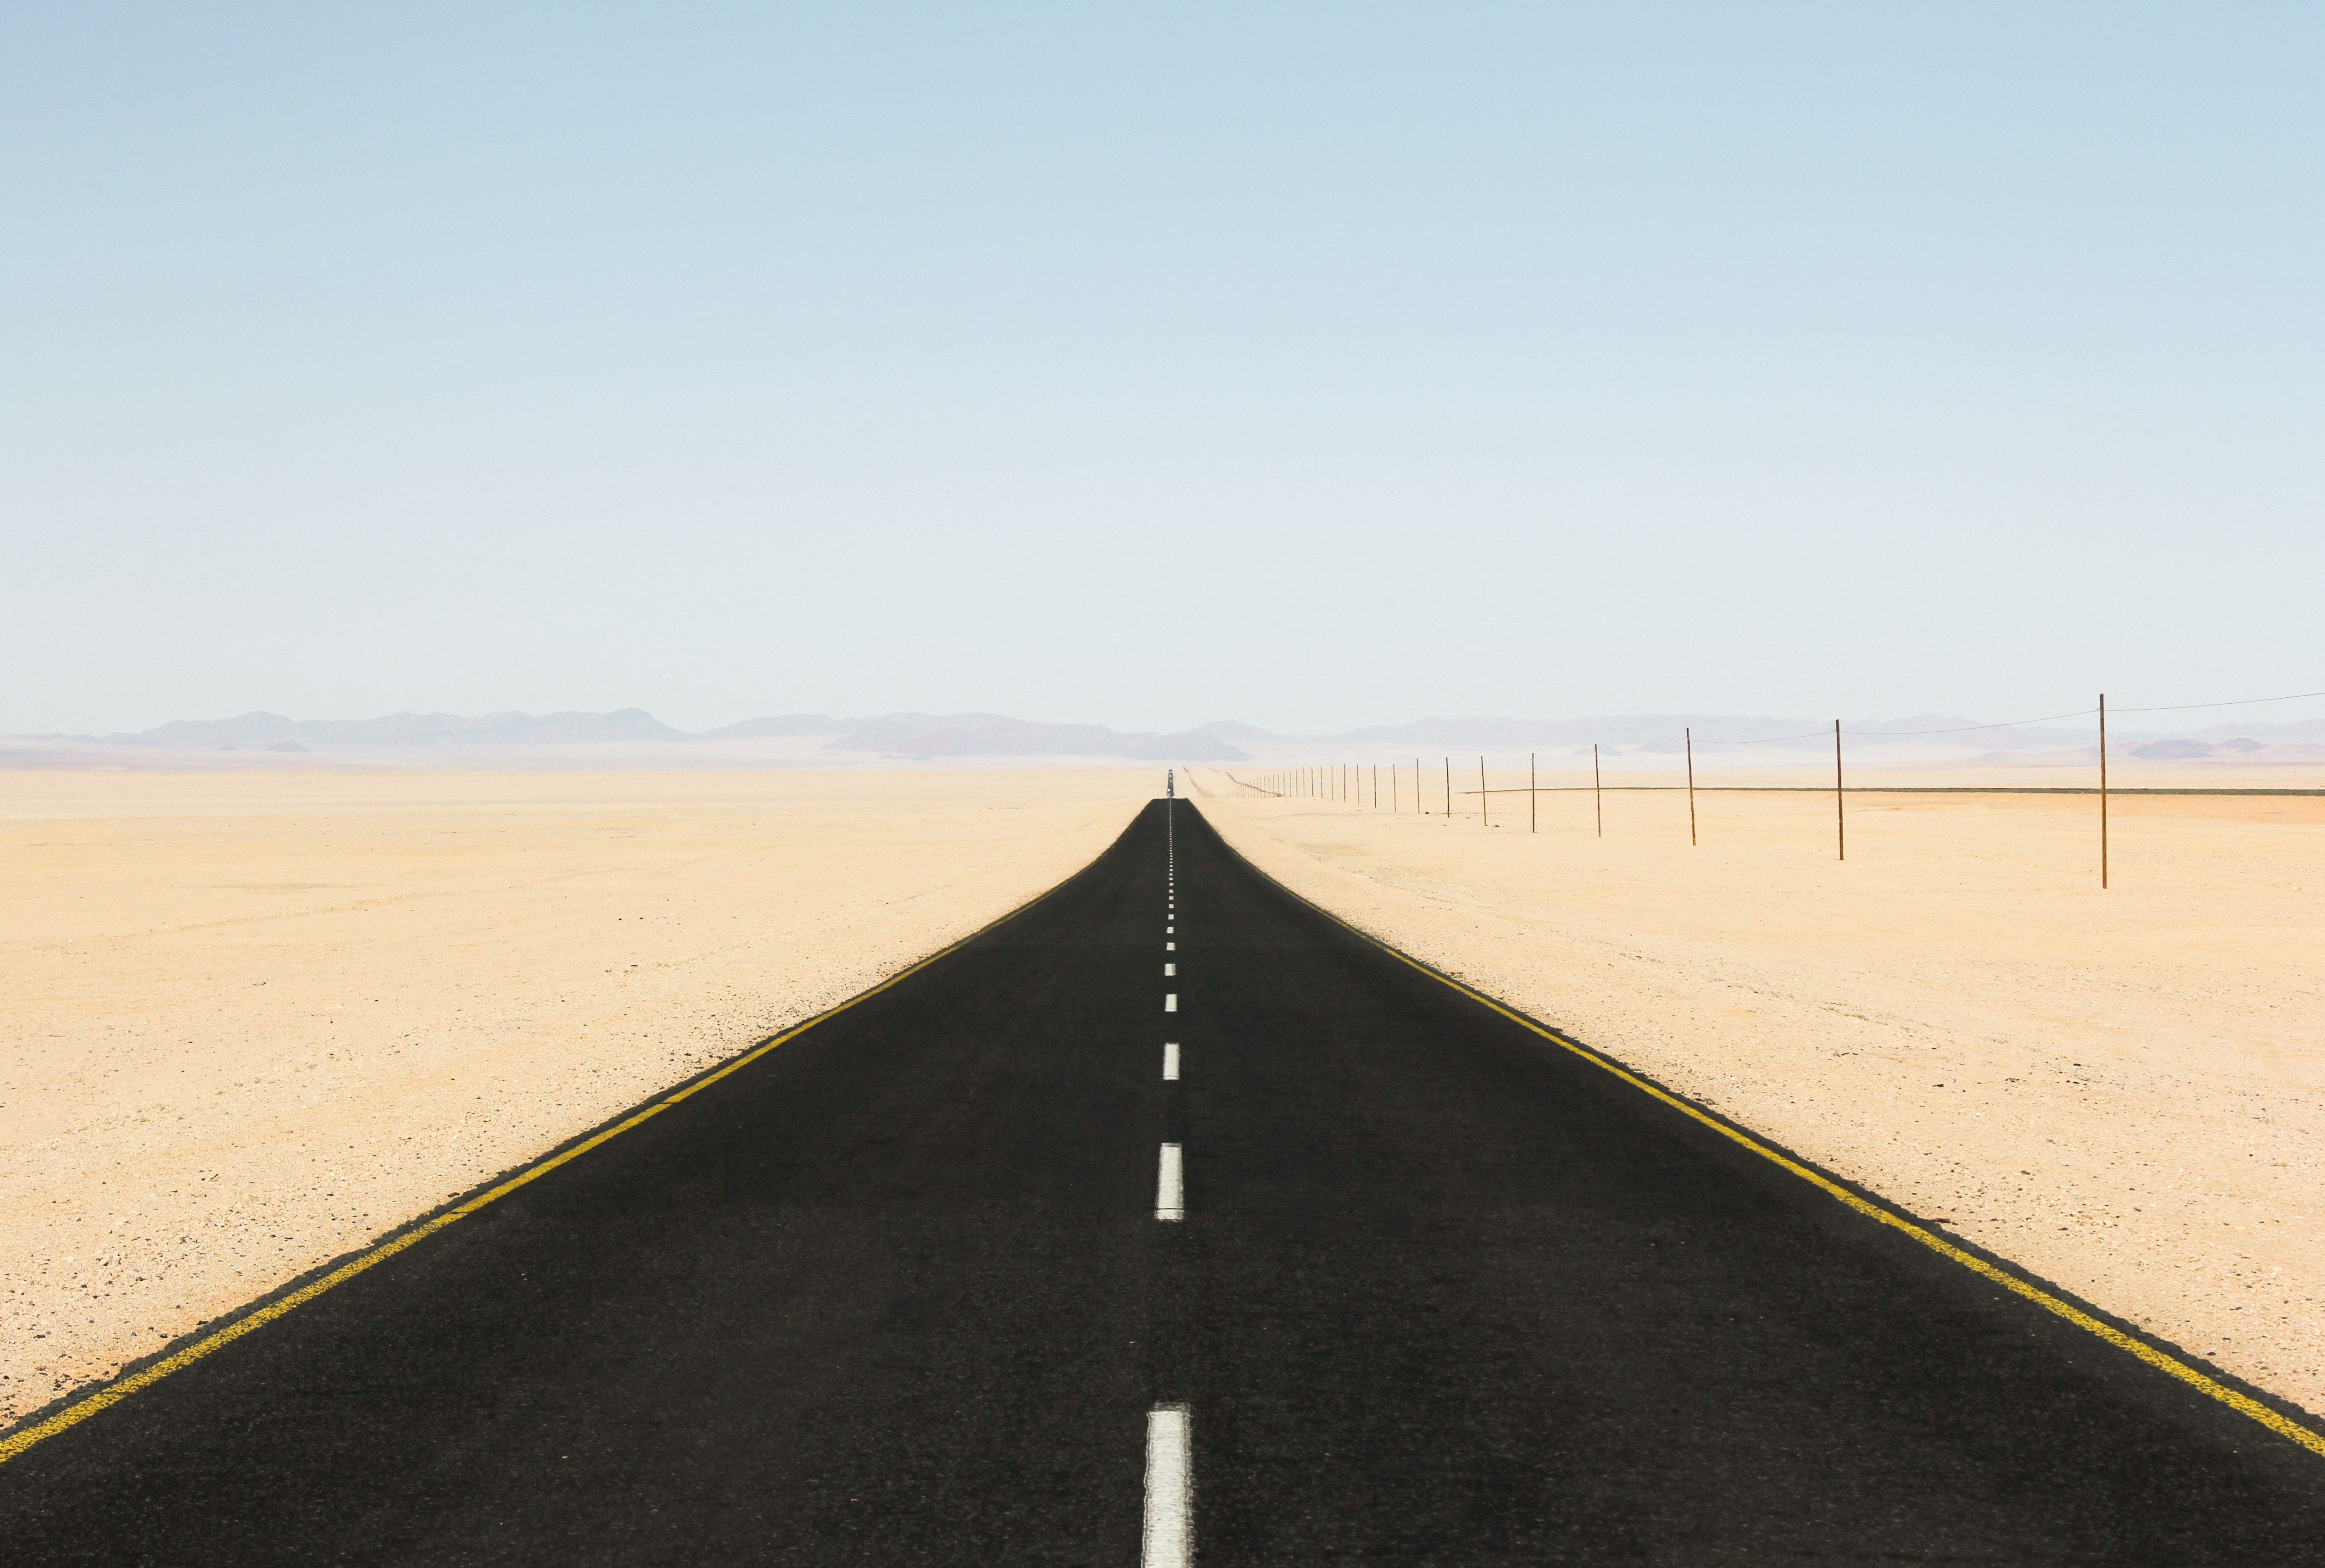 The black road through the desert